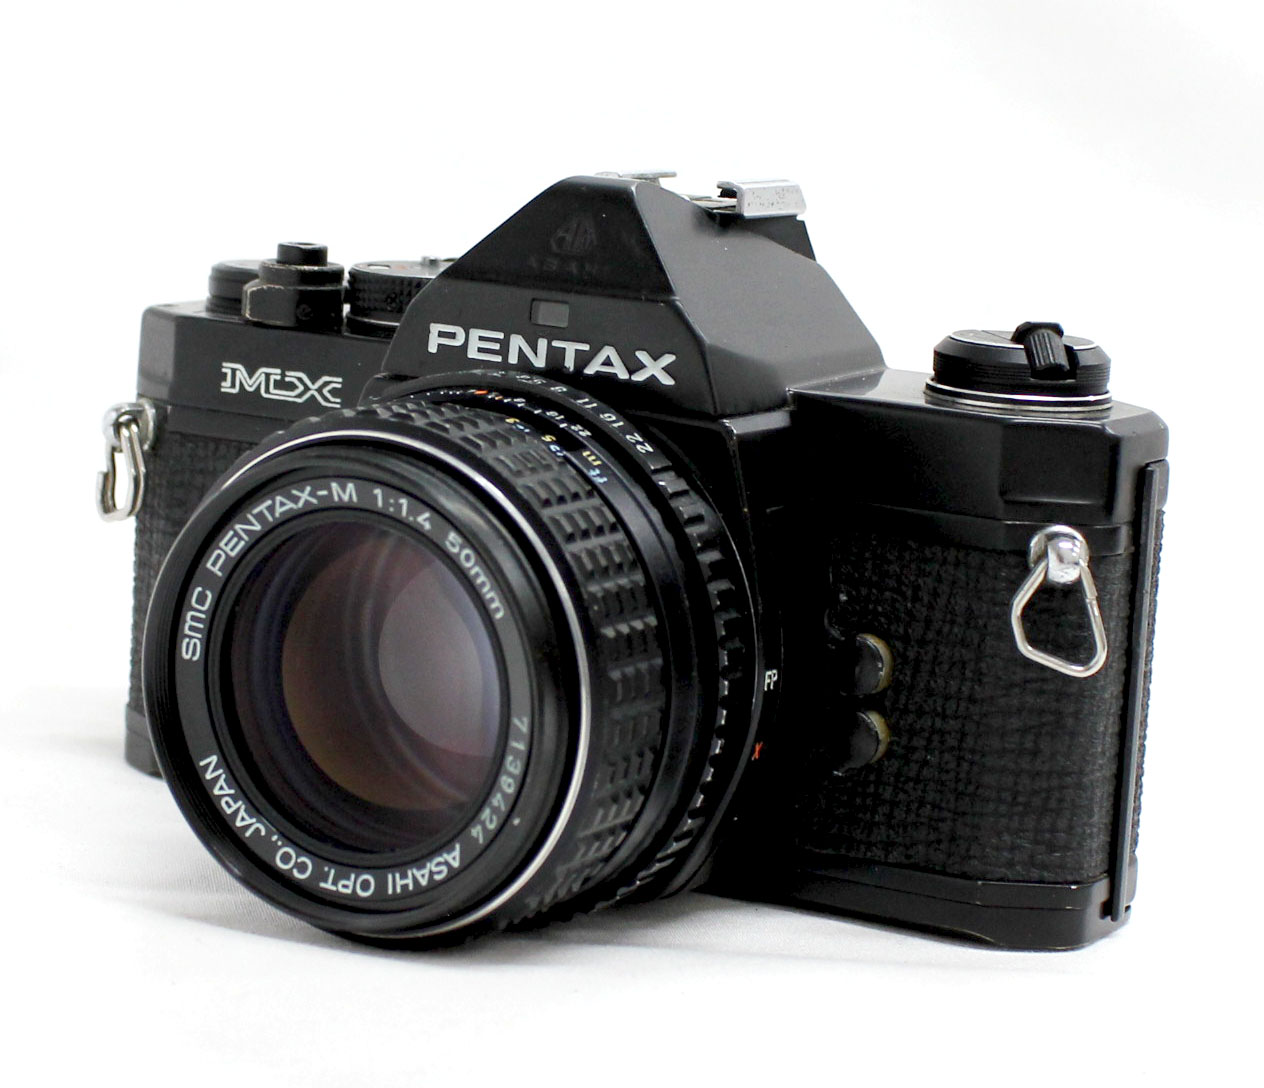 Japan Used Camera Shop | [Excellent++++] Pentax MX 35mm SLR Film Camera Black with SMC Pentax-M 50mm F/1.4 Lens from Japan